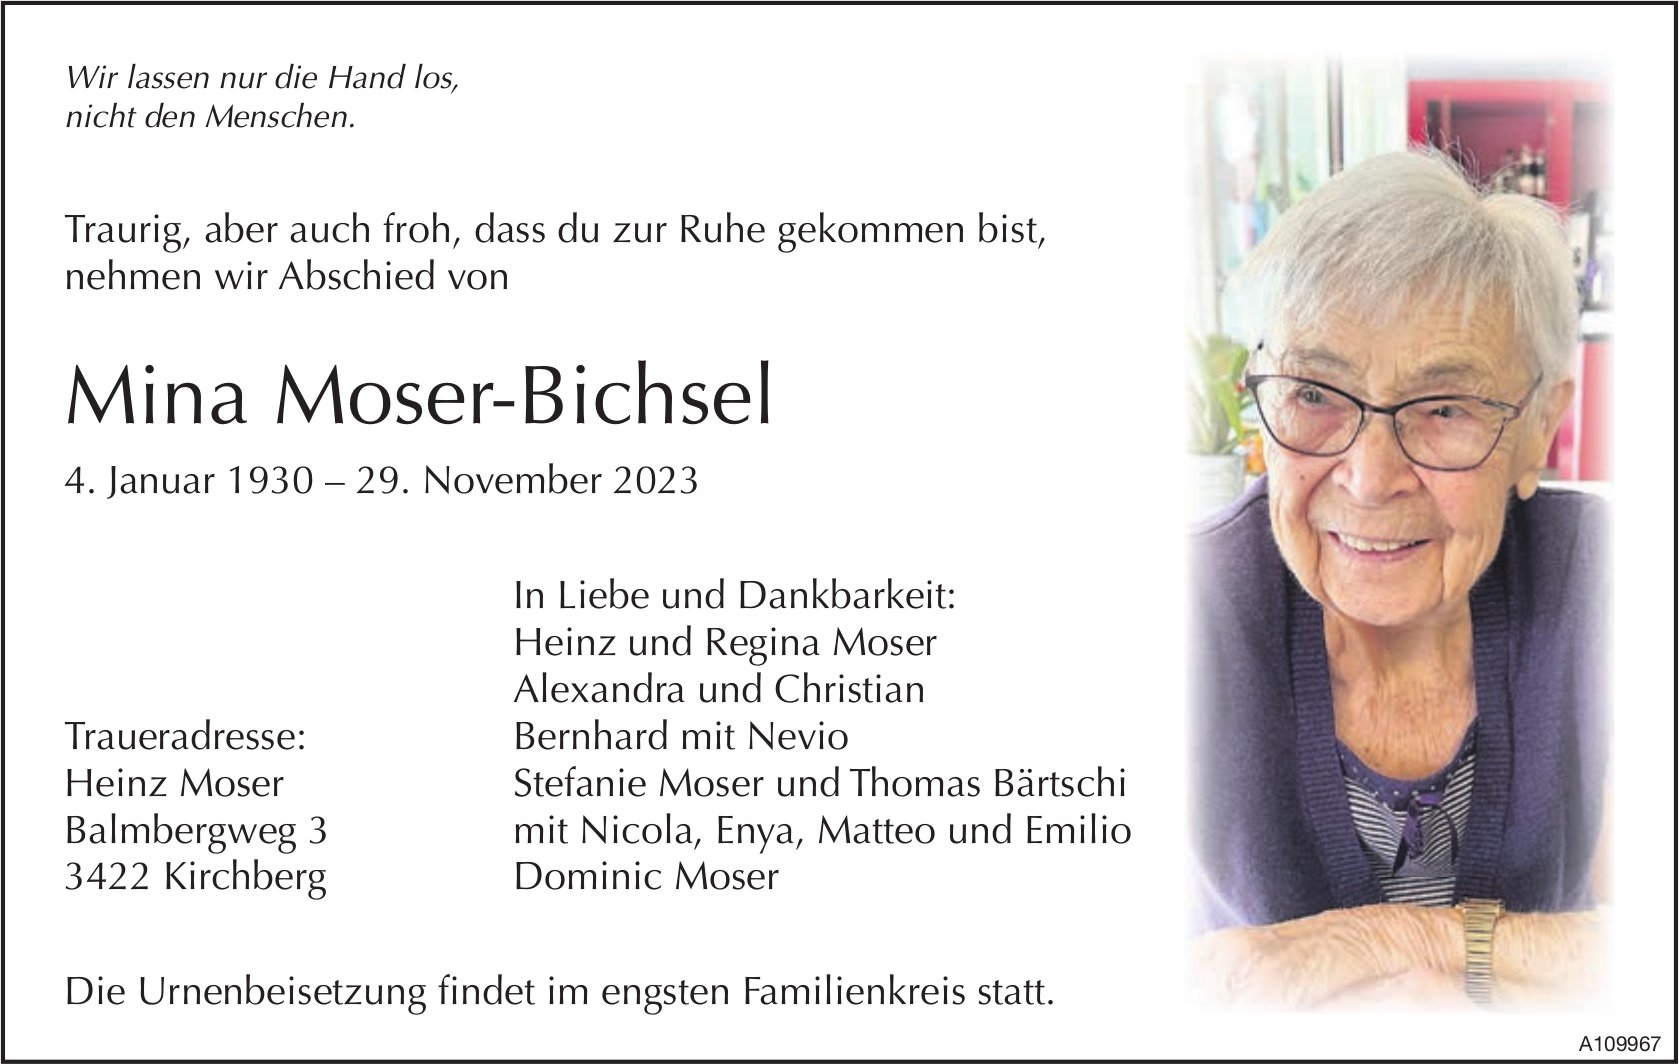 Mina Moser-Bichsel, November 2023 / TA